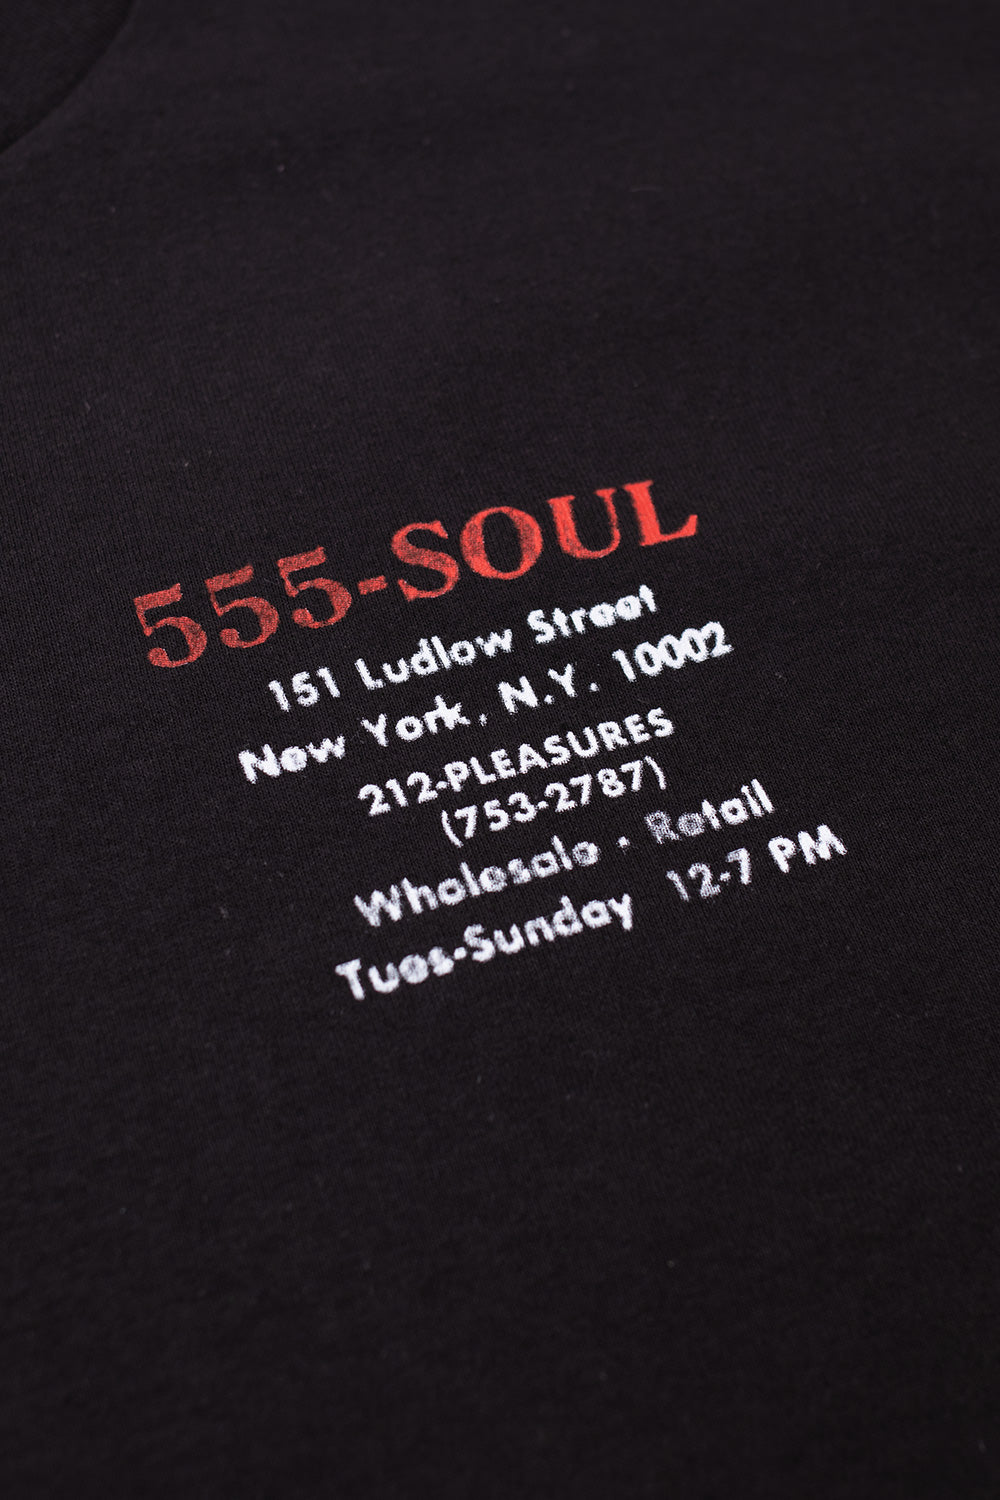 Pleasures X Triple 5 Soul Biz Card T-Shirt Black - BONKERS